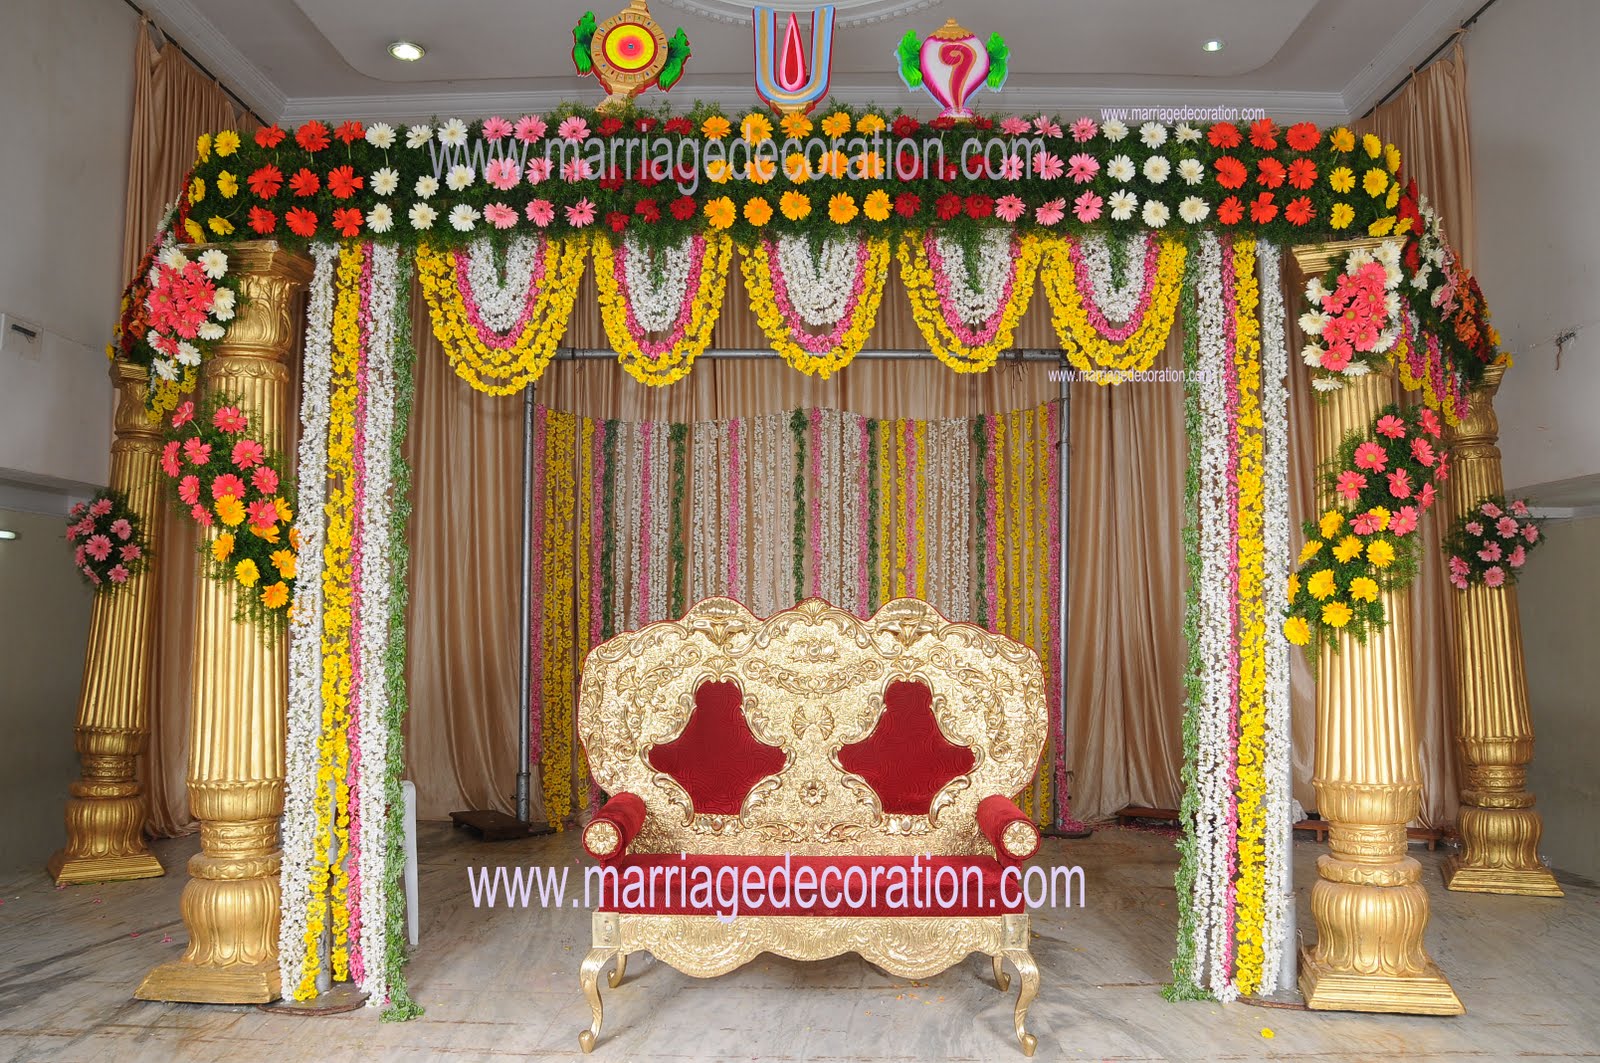 hindu wedding decorations in india